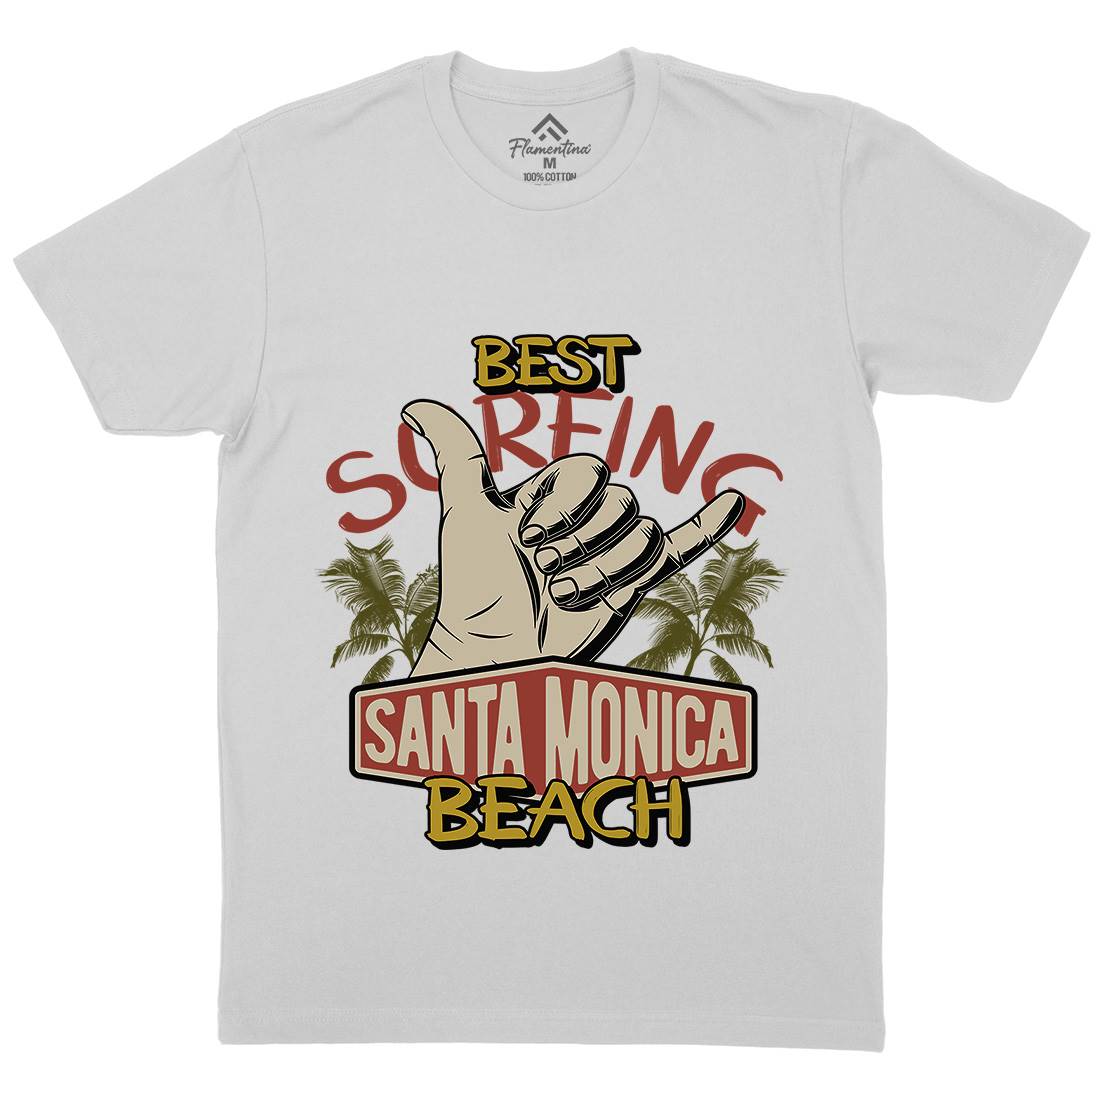 Best Surfing Beach Mens Crew Neck T-Shirt Surf D909